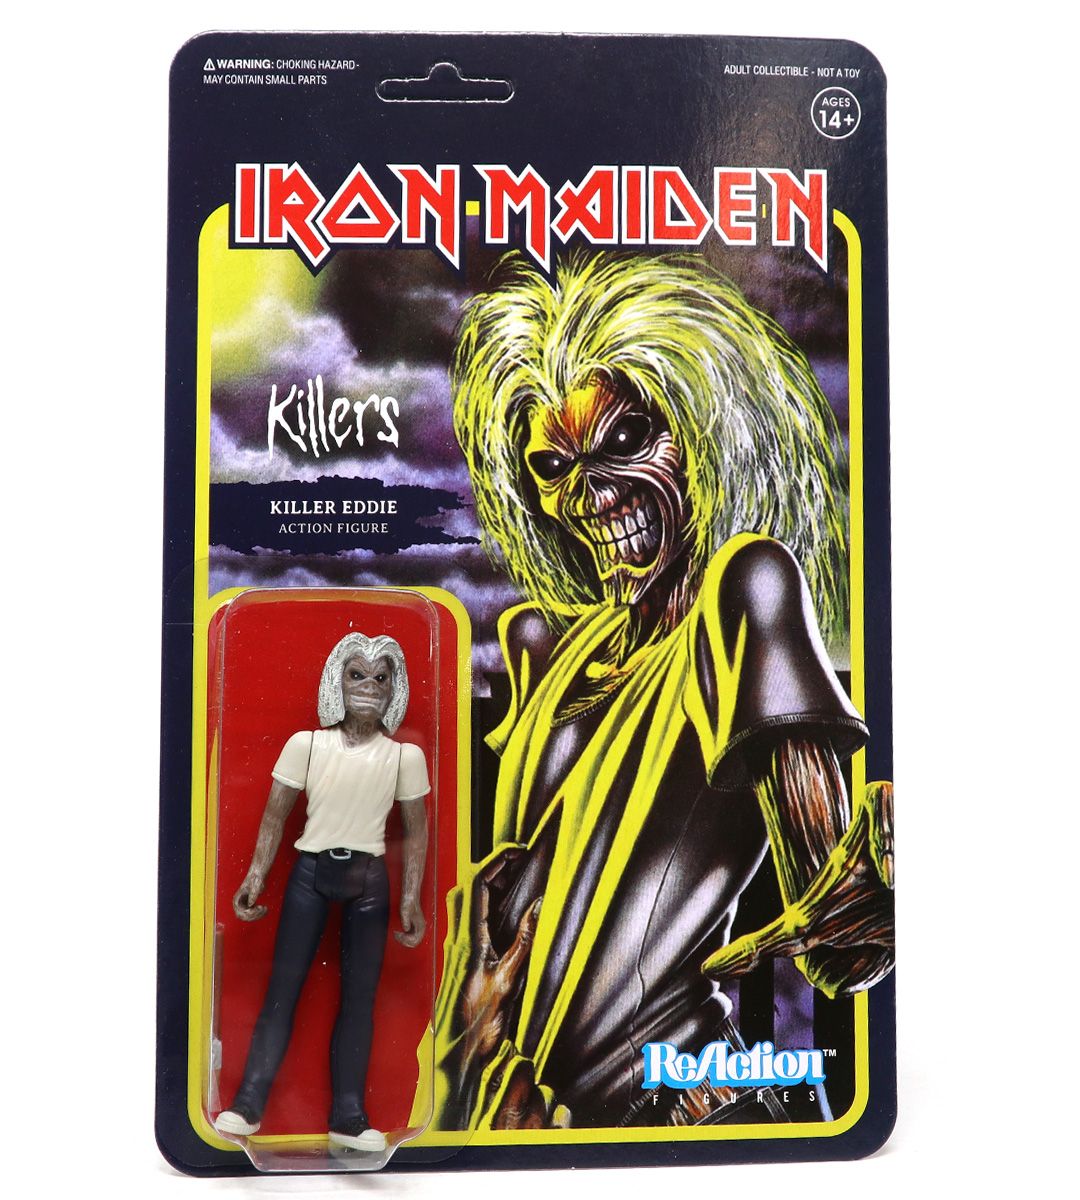 Killer Eddie - Iron Maiden wave 1 - ReAction figure